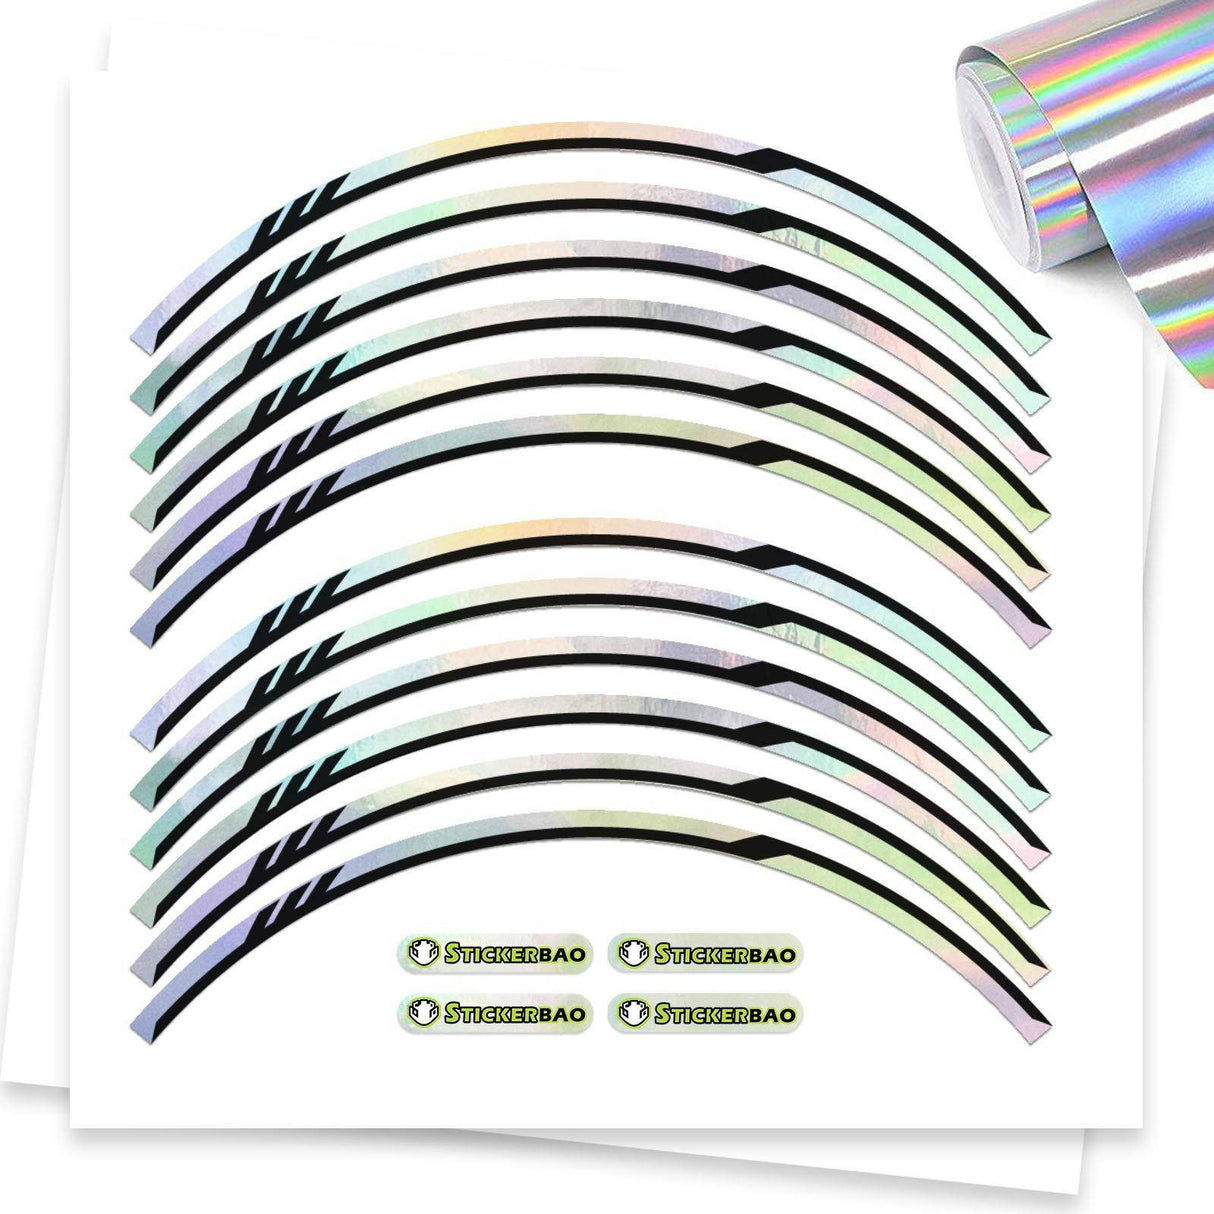 17 inch Rim Chrome Holographic Wheel Stickers J05 Rim Skin Decal Strip | For Ducati Monster 821 1200 797.